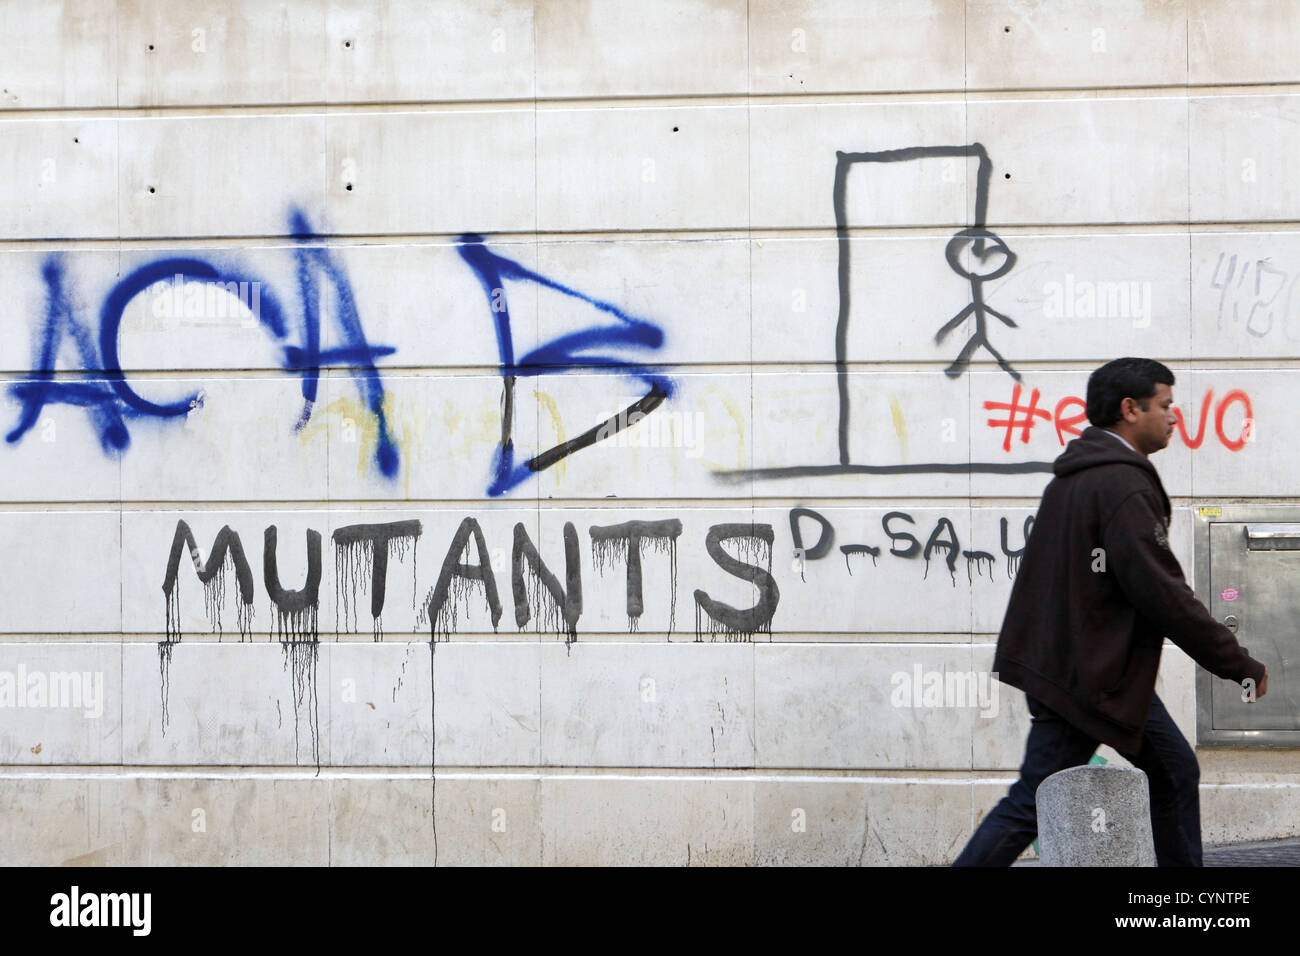 Man walking past graffiti wall painting Mutants, self-expression, Madrid, Spain, Espana Stock Photo